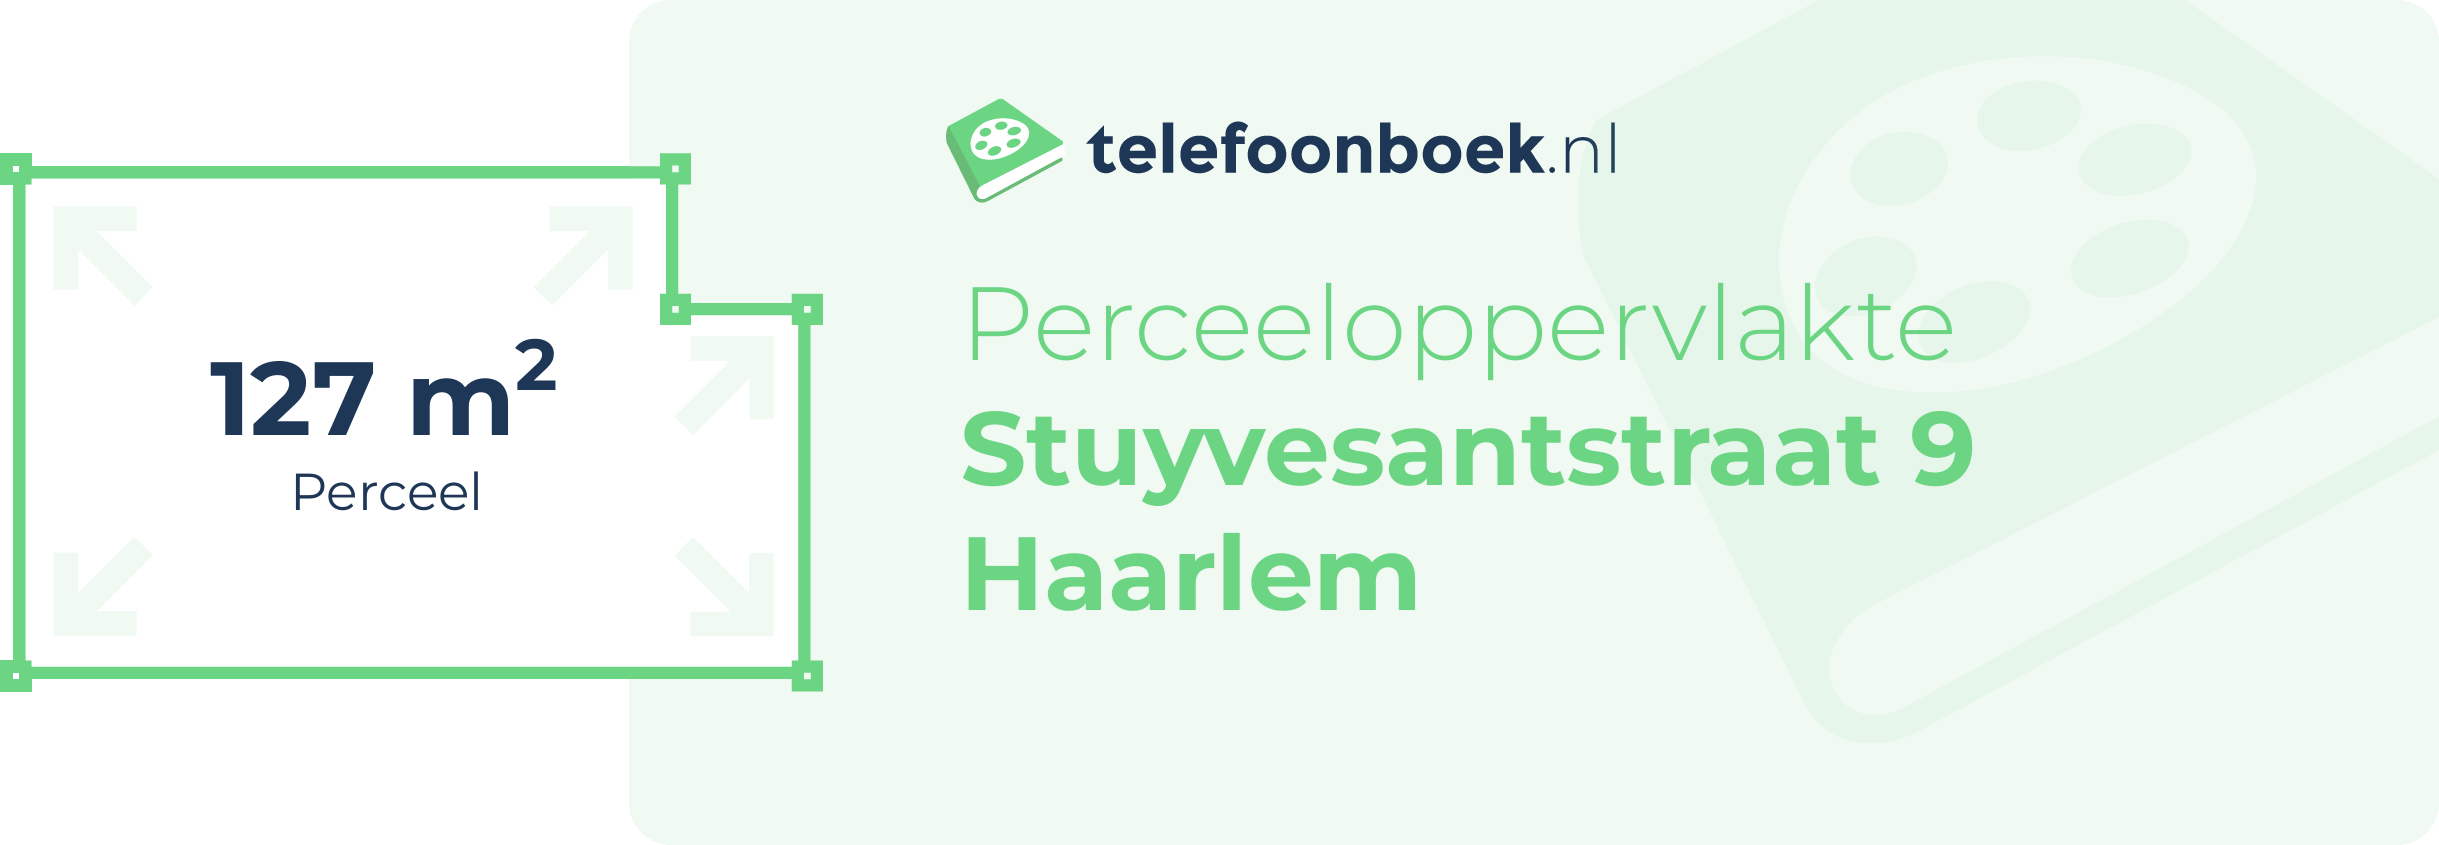 Perceeloppervlakte Stuyvesantstraat 9 Haarlem